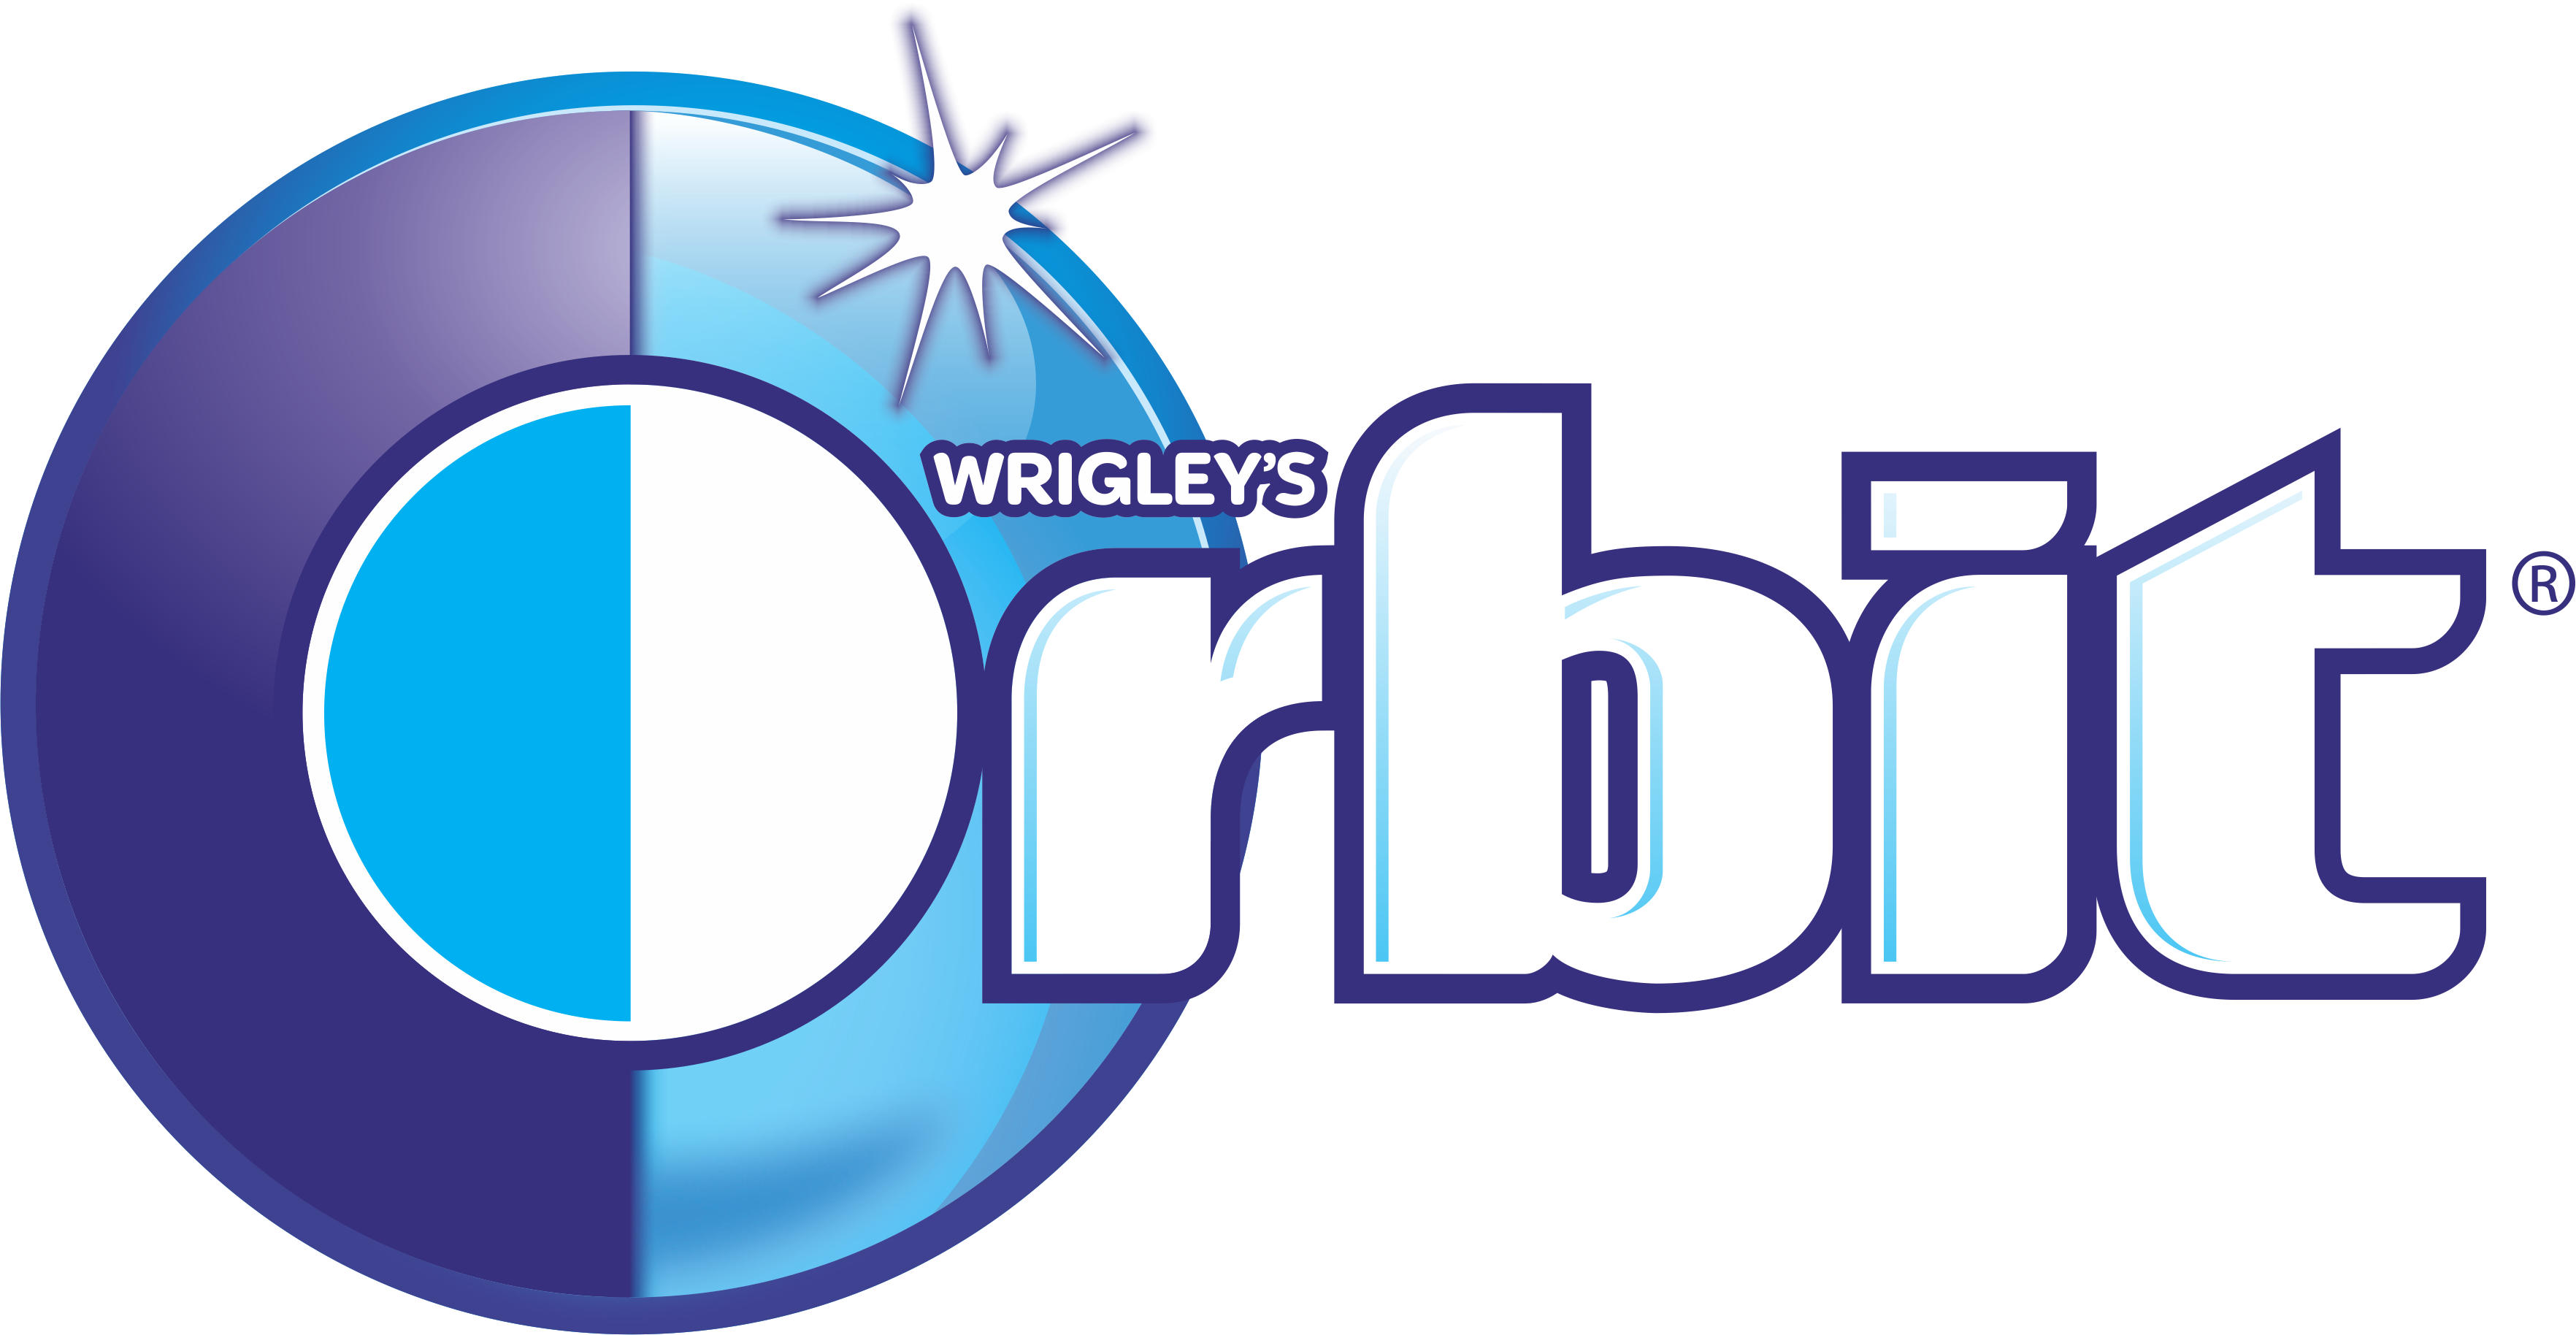 Wrigley's Orbit Gum Brands 2015 - Орбит Лого (3528x1828)